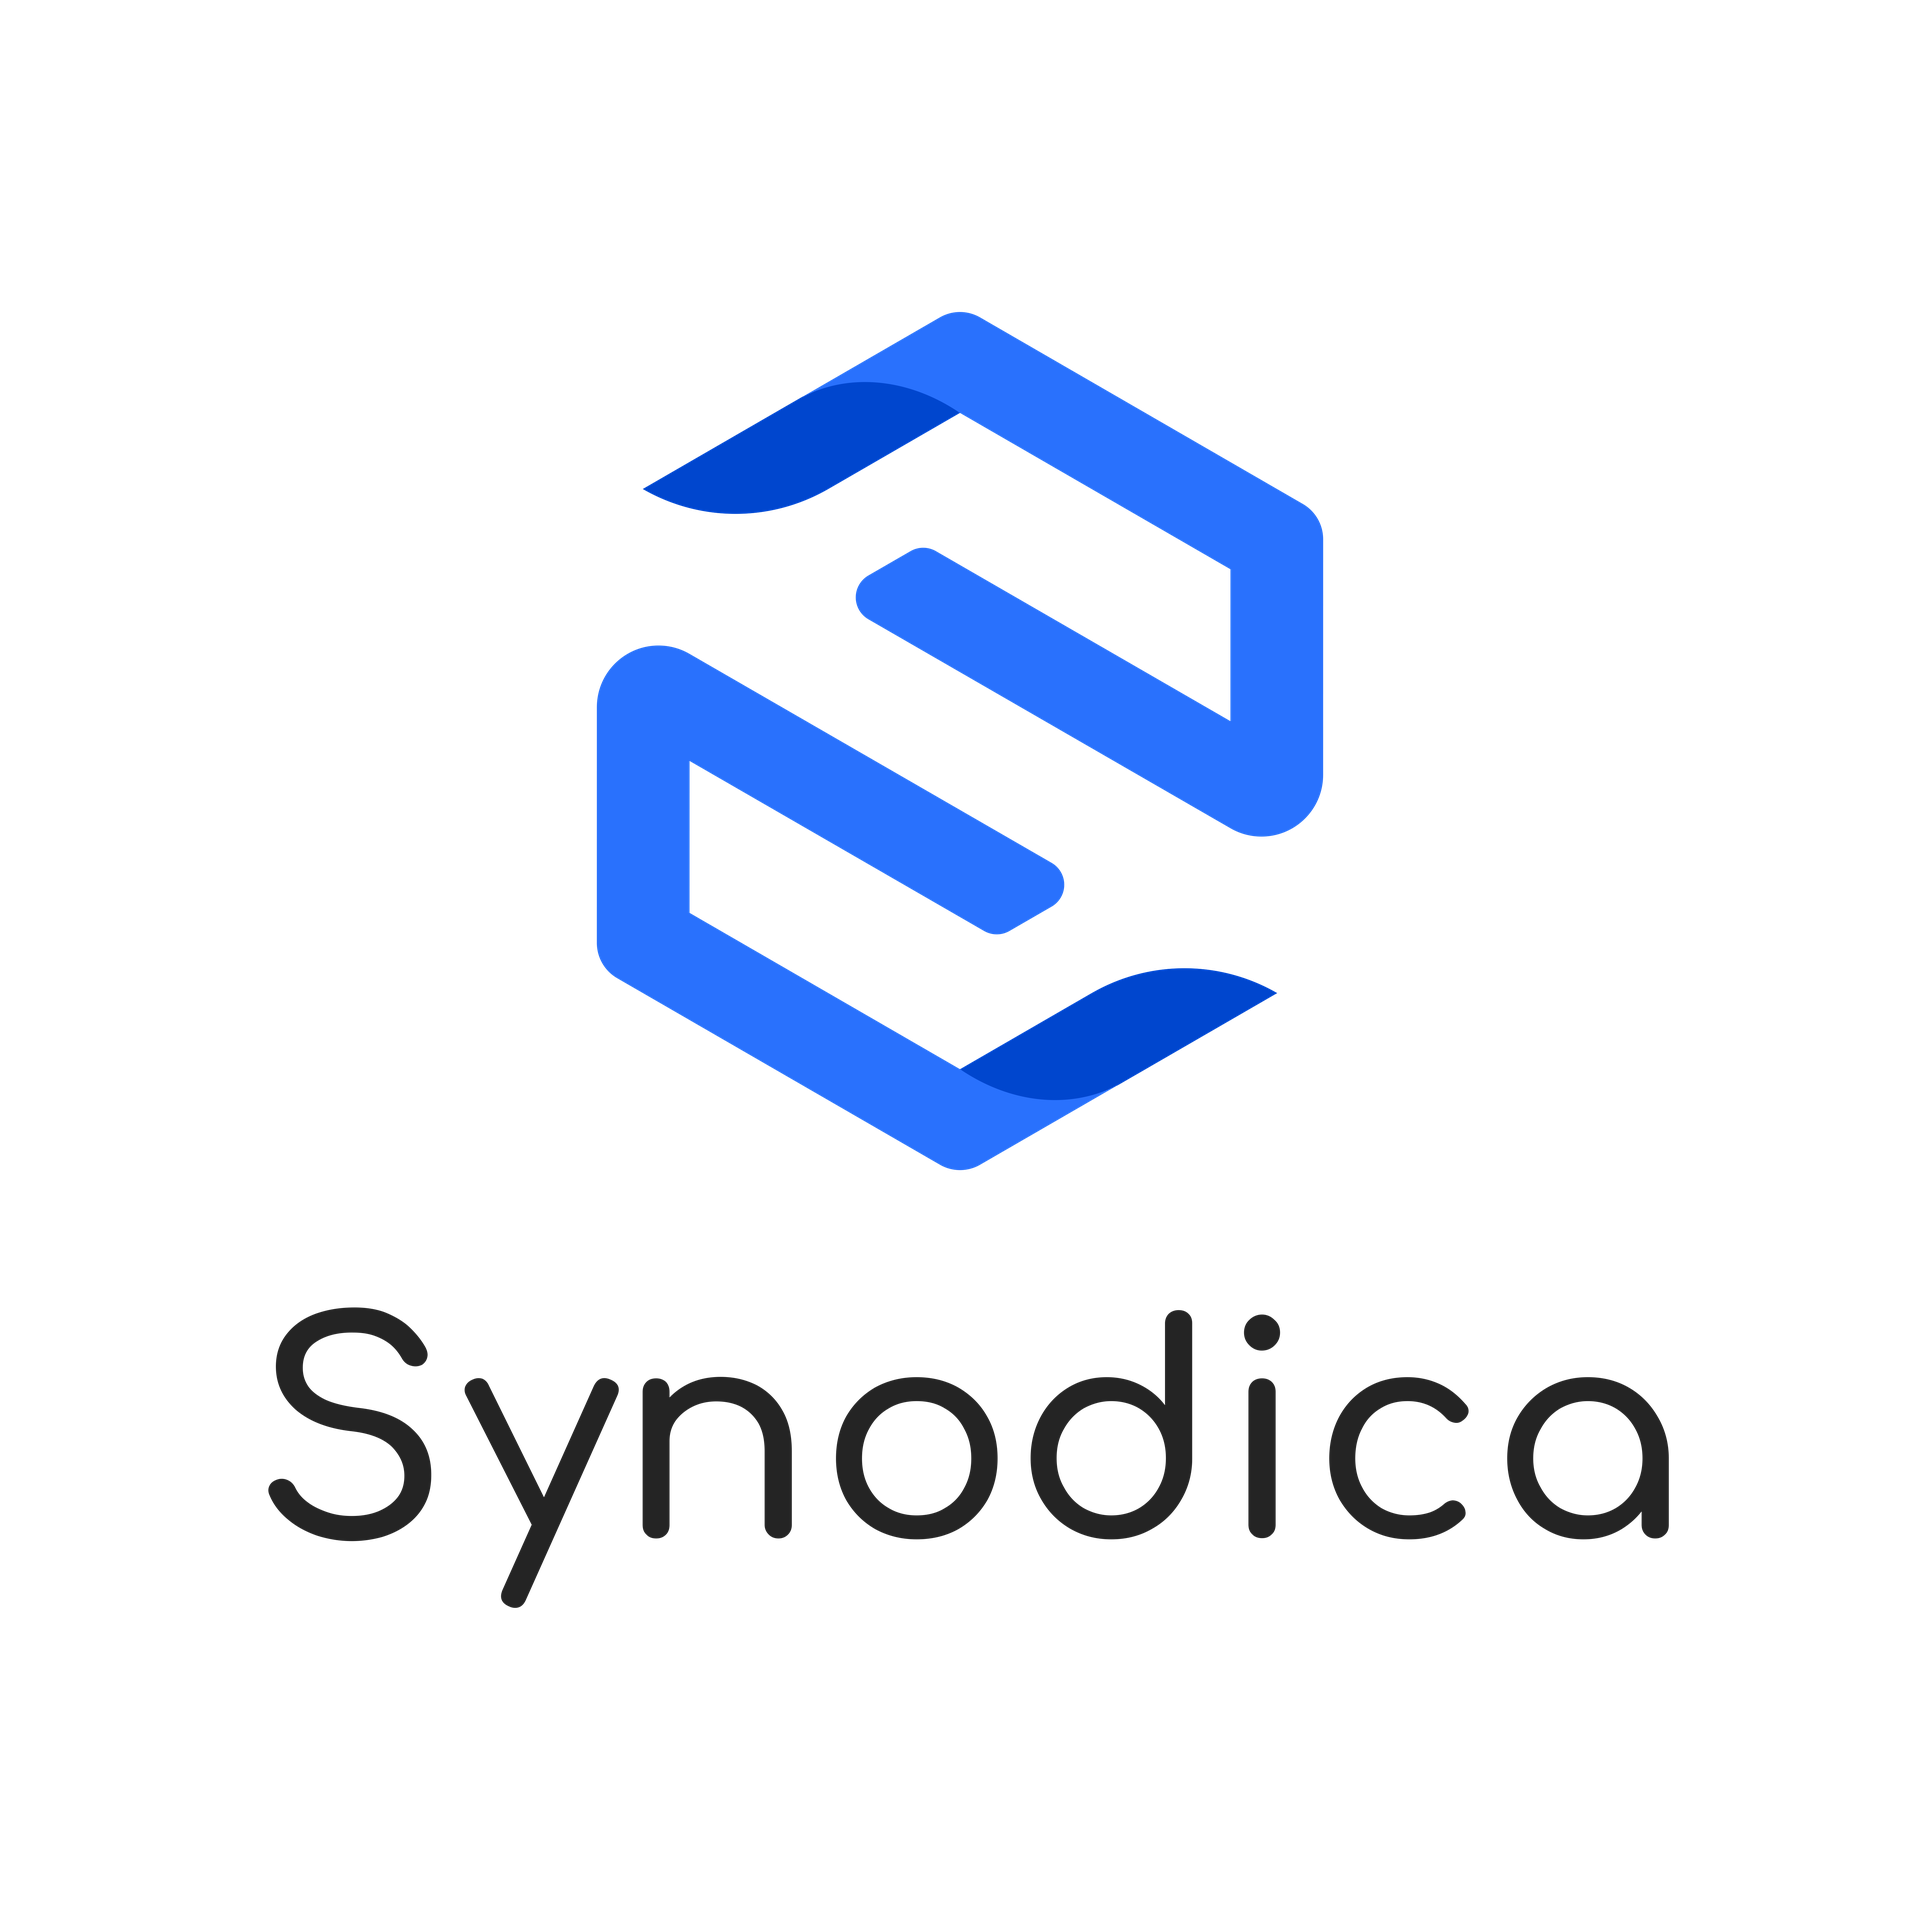 Synodica Solutions Pvt. Ltd.